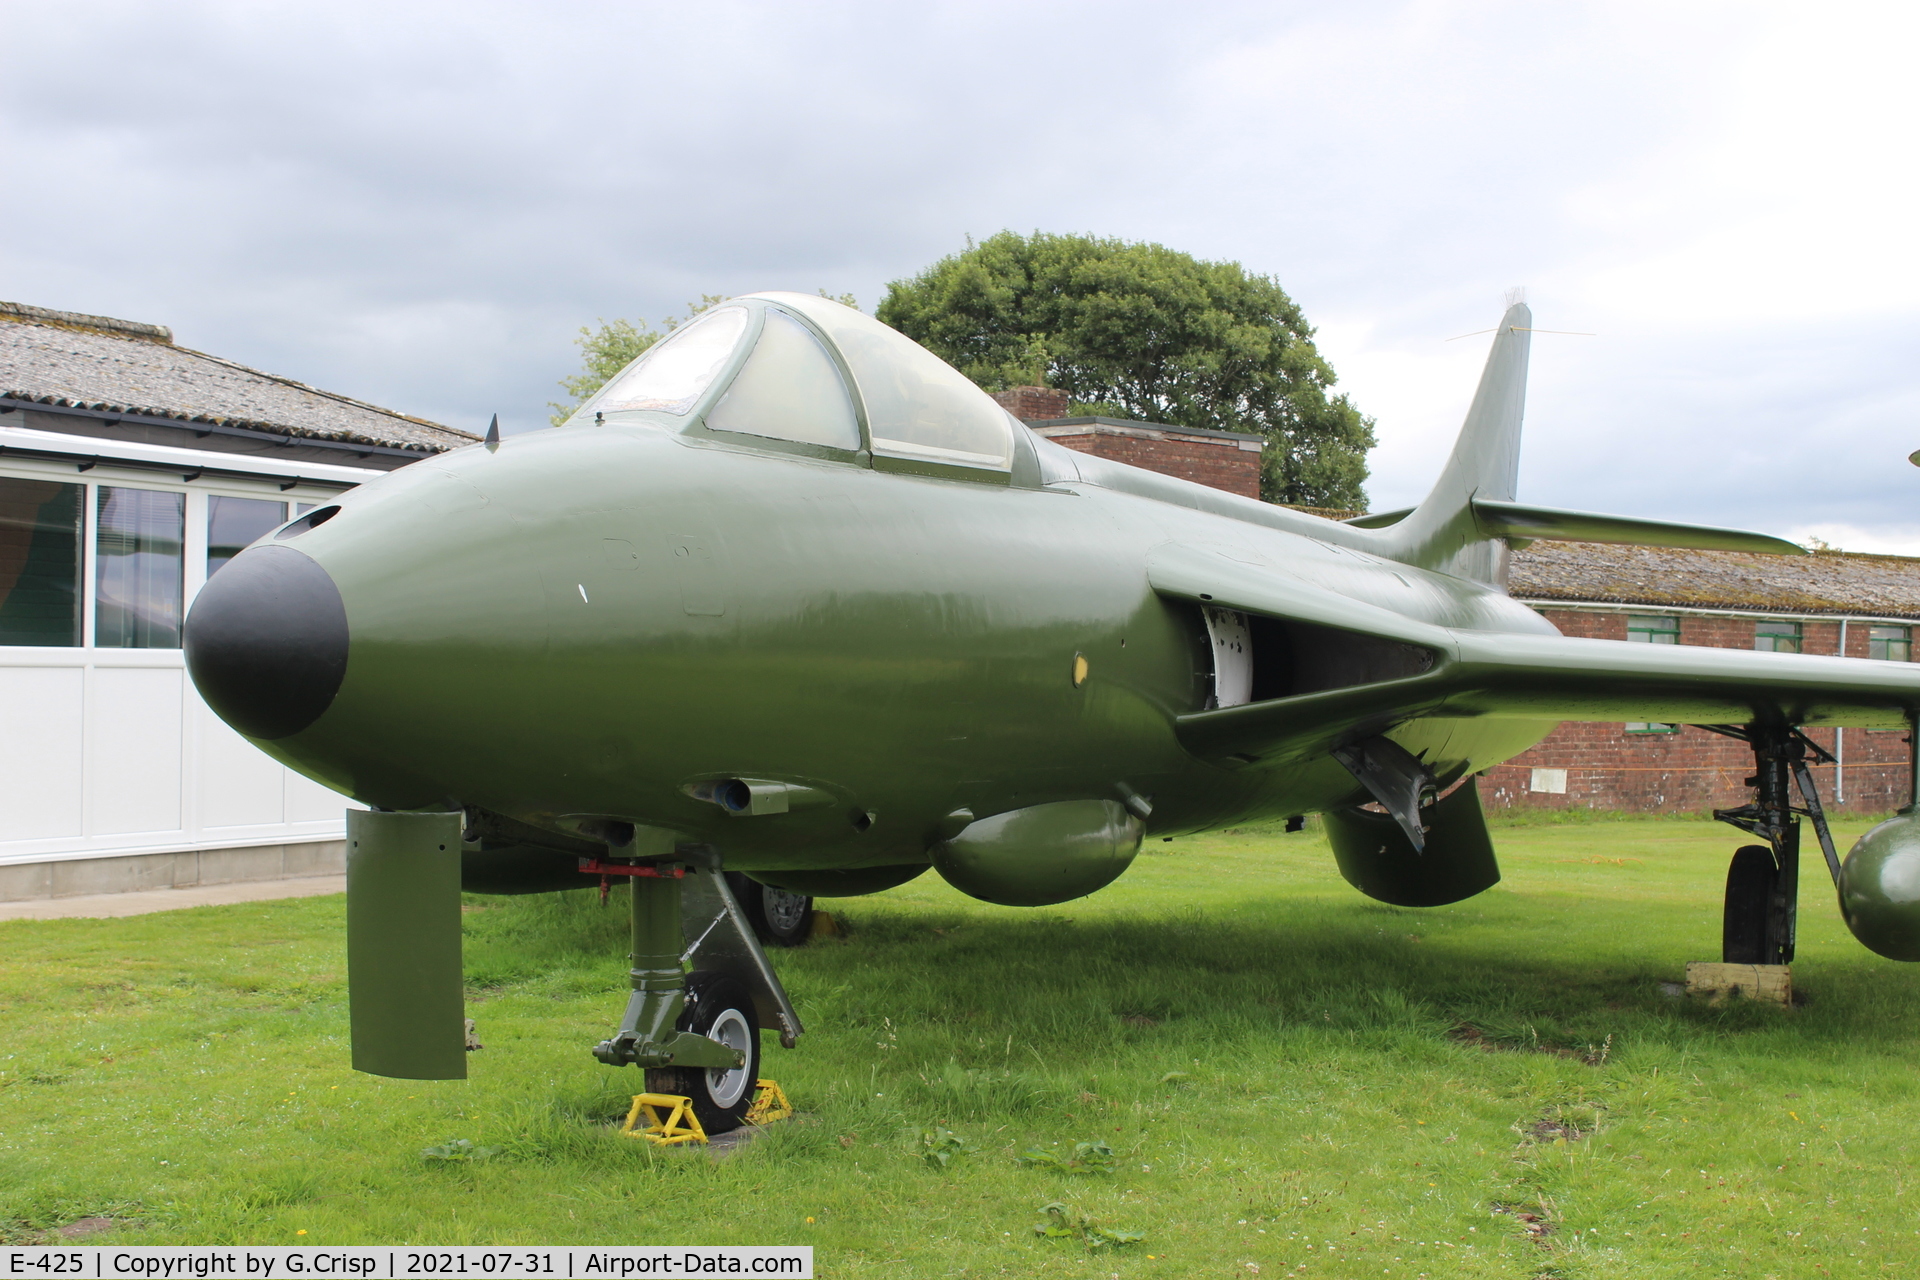 E-425, 1962 Hawker Hunter F.51 C/N 41H-688079, Solway Aviation Musuem, UK